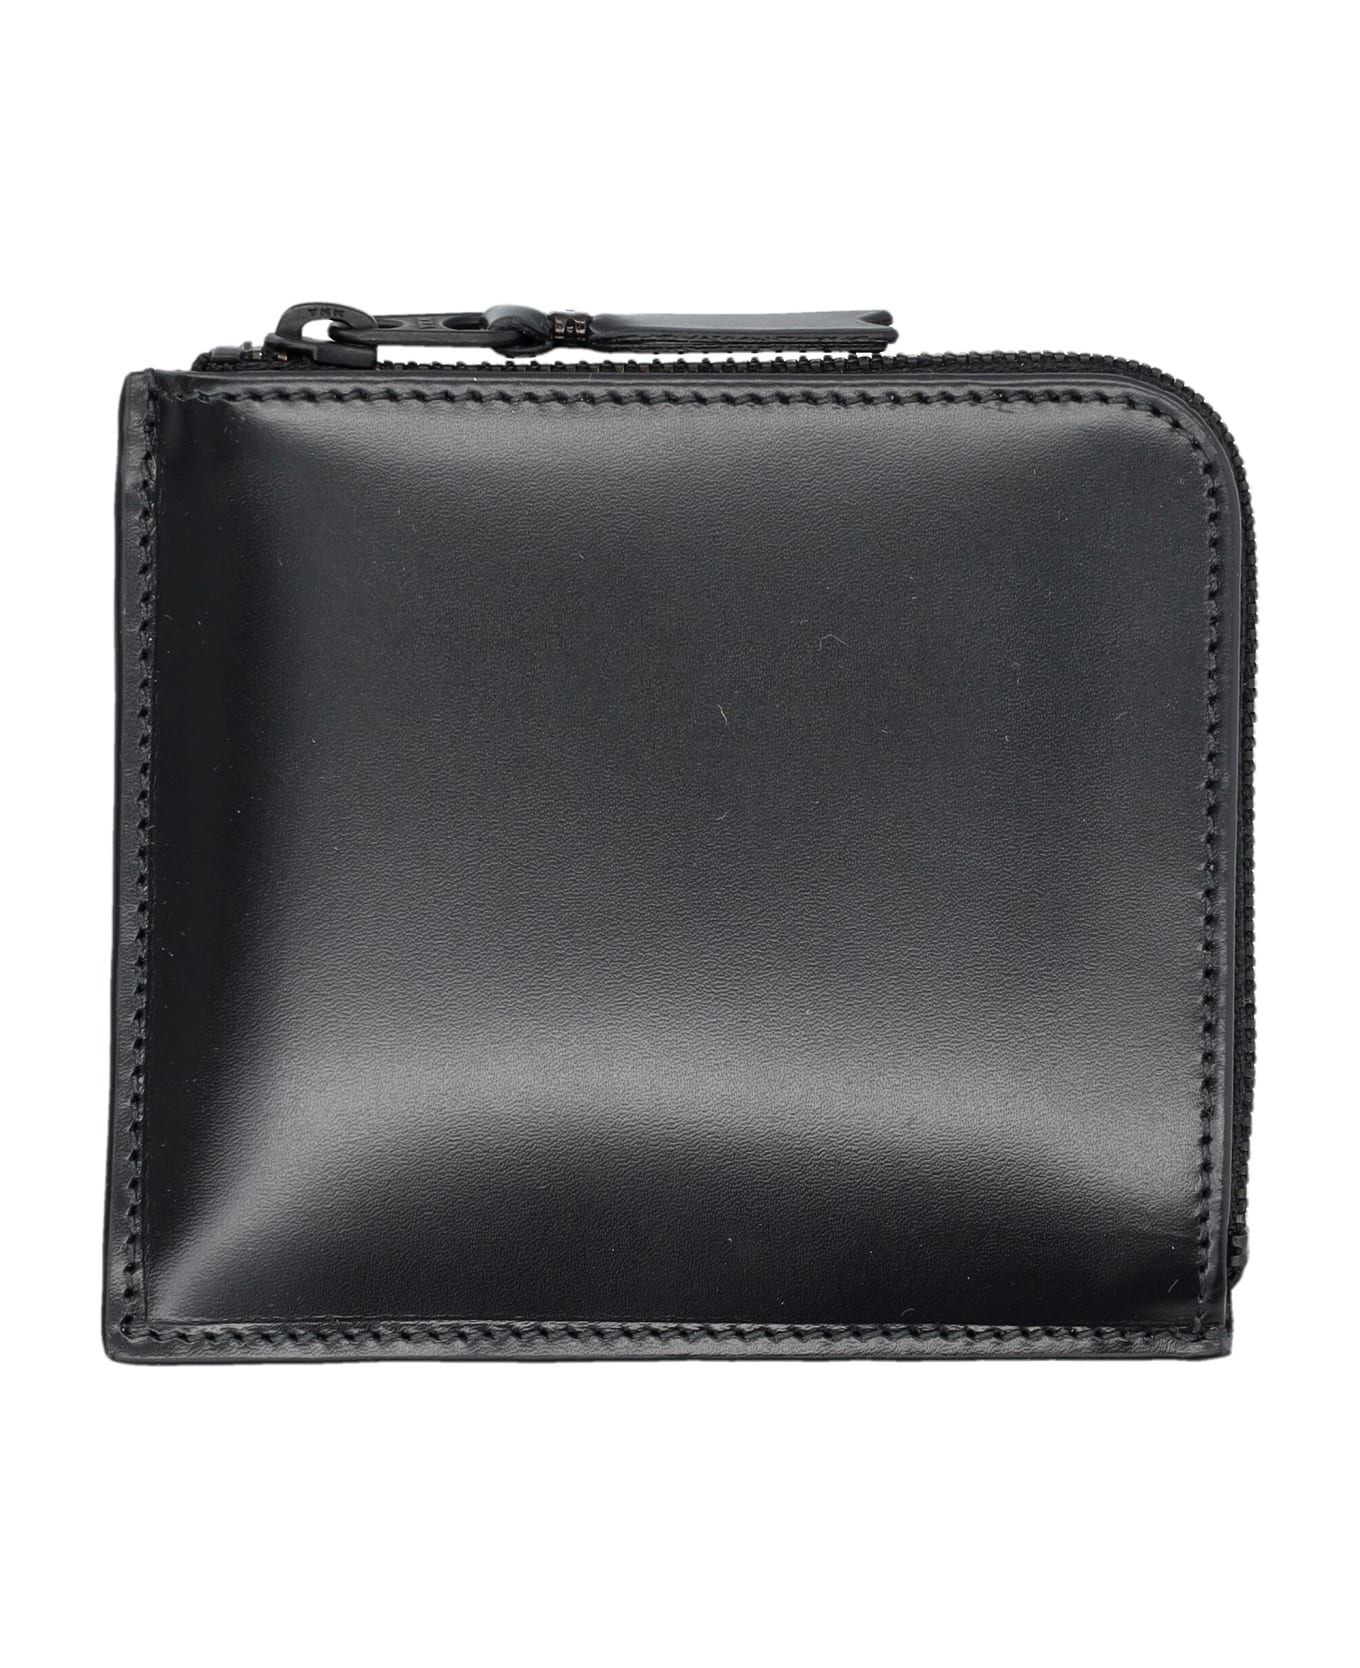 Comme des Garçons Wallet Very Black Zip Wallet - BLACK